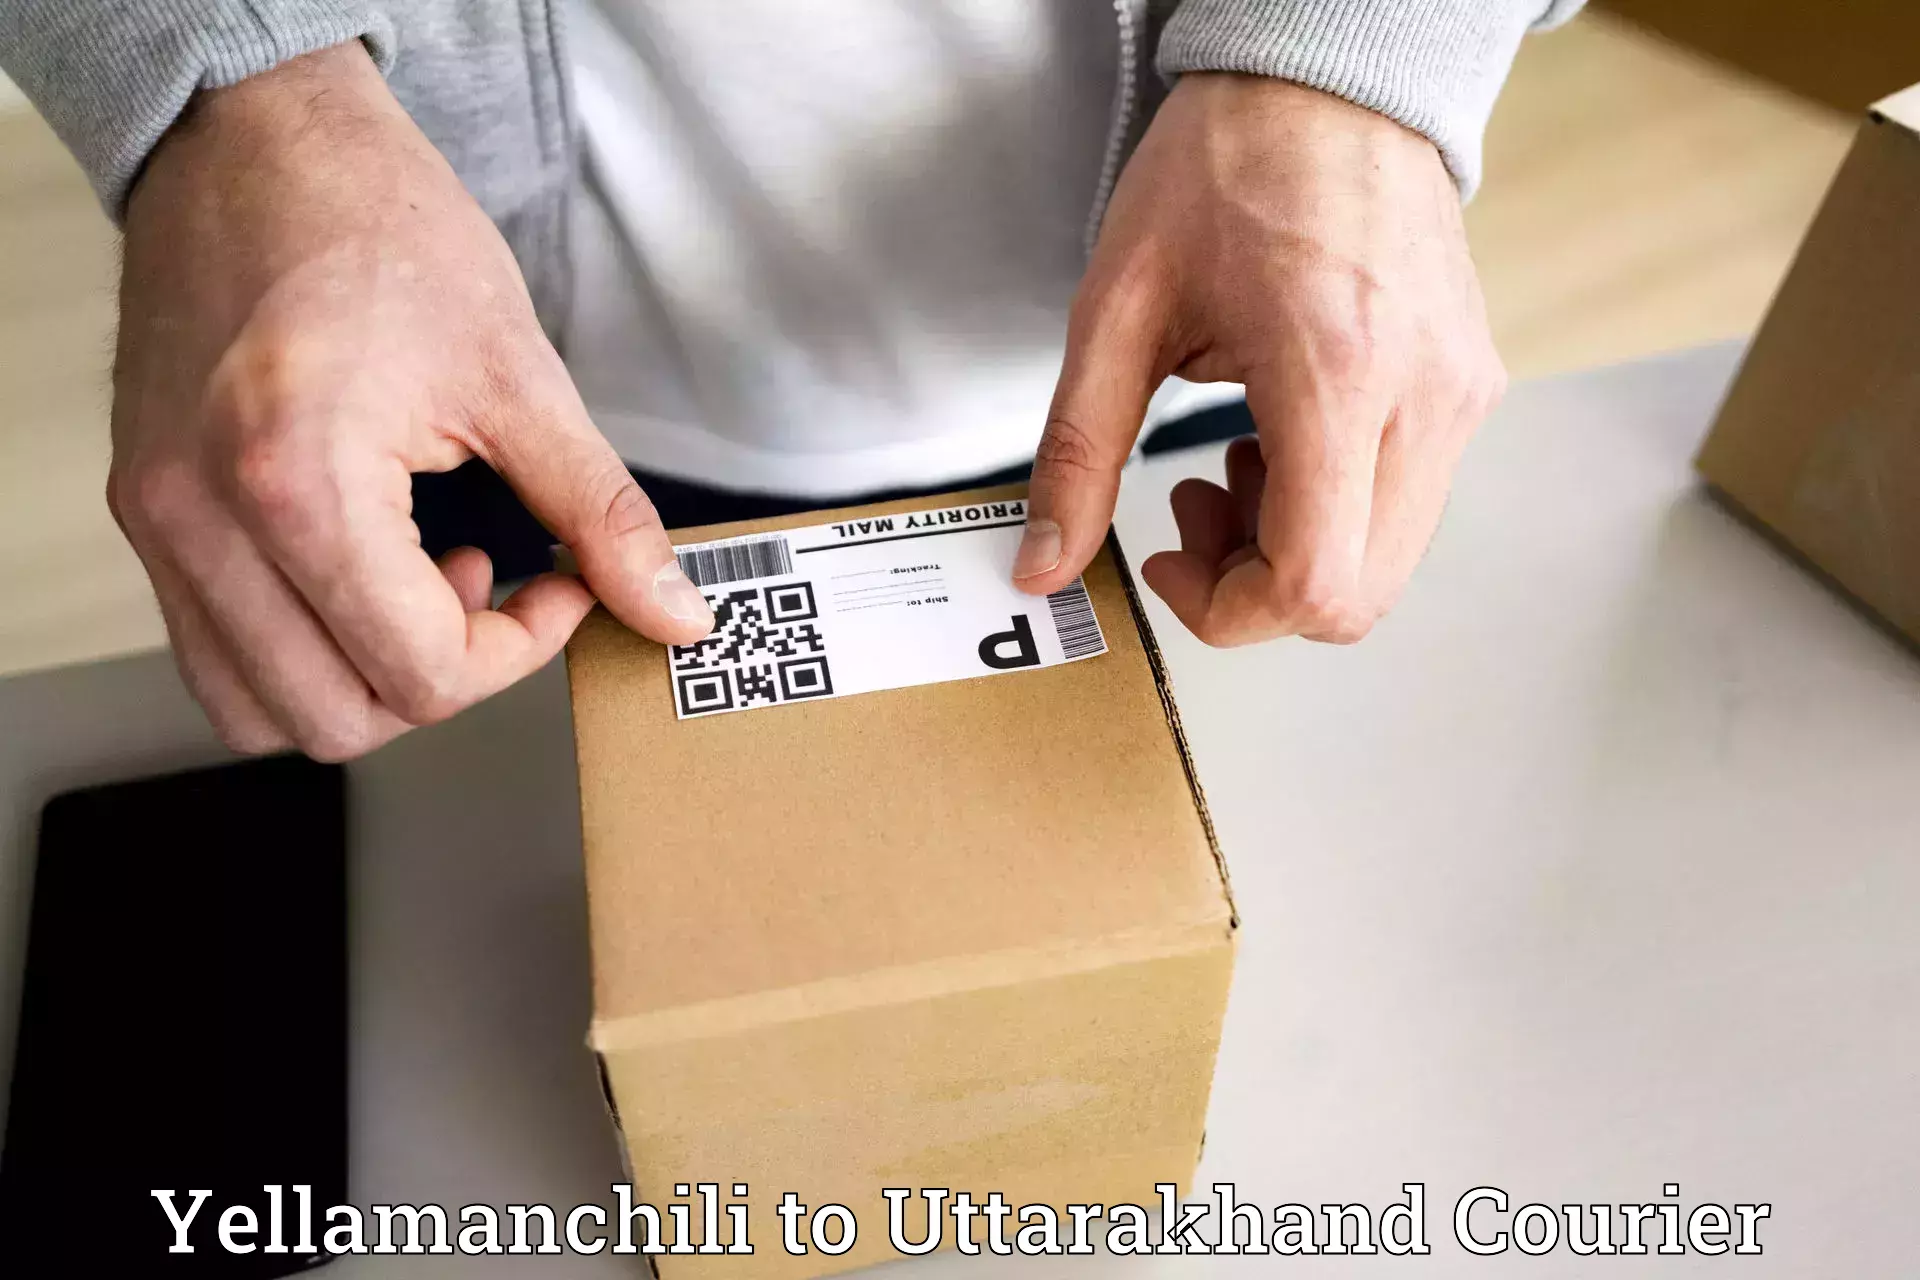 Affordable parcel service Yellamanchili to Bageshwar